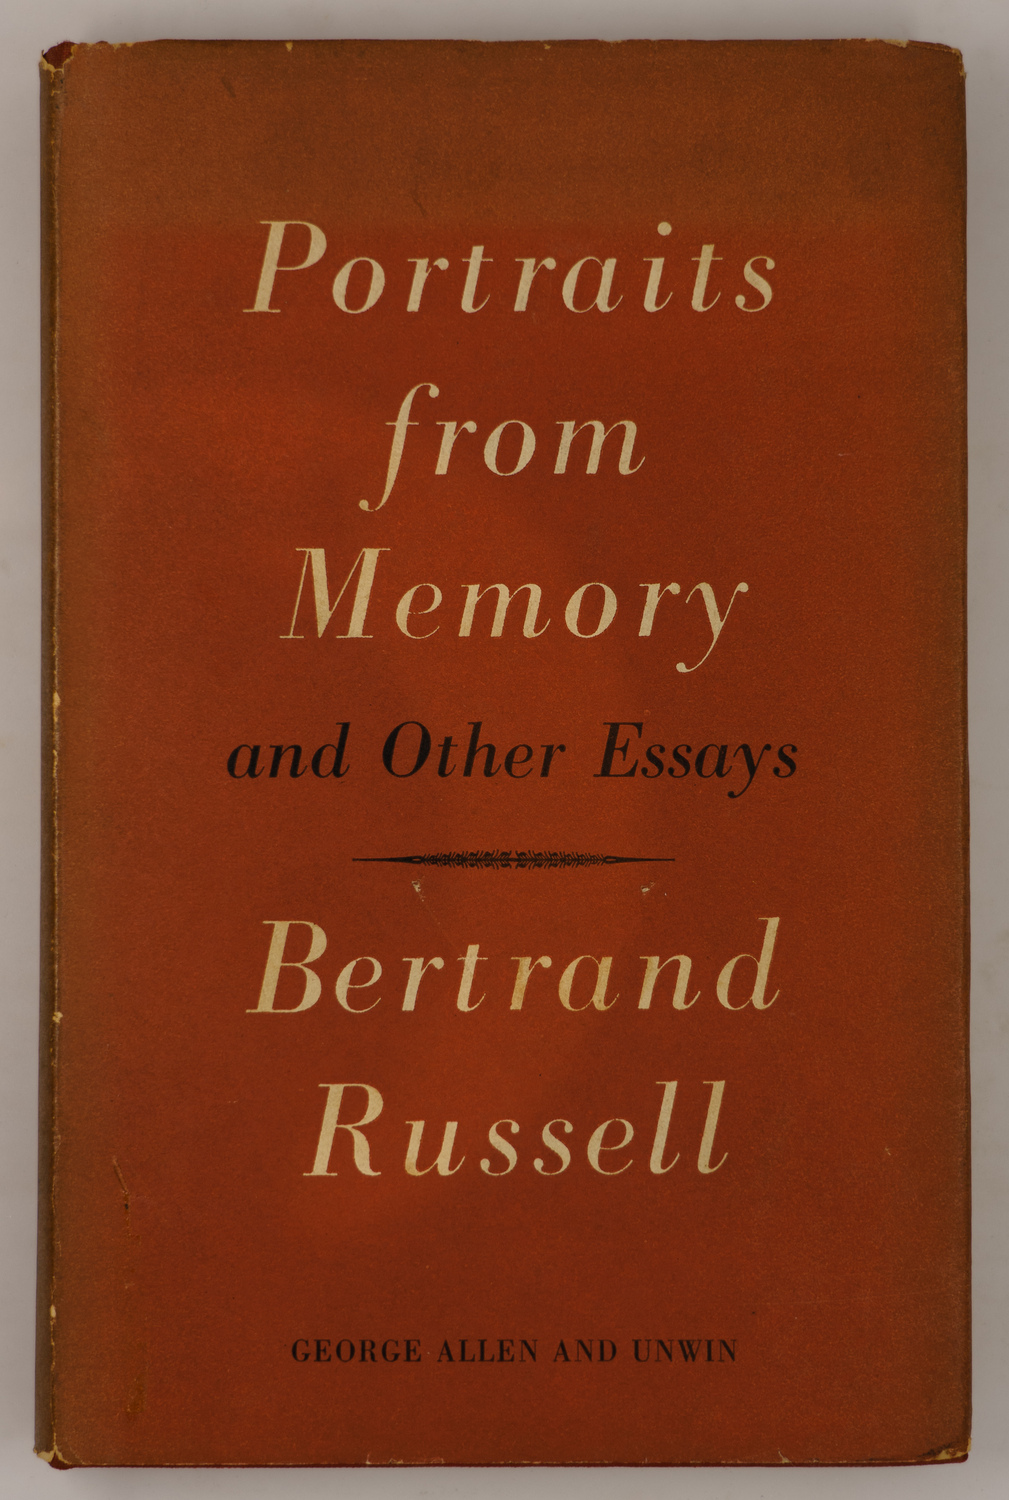 essays of bertrand russell